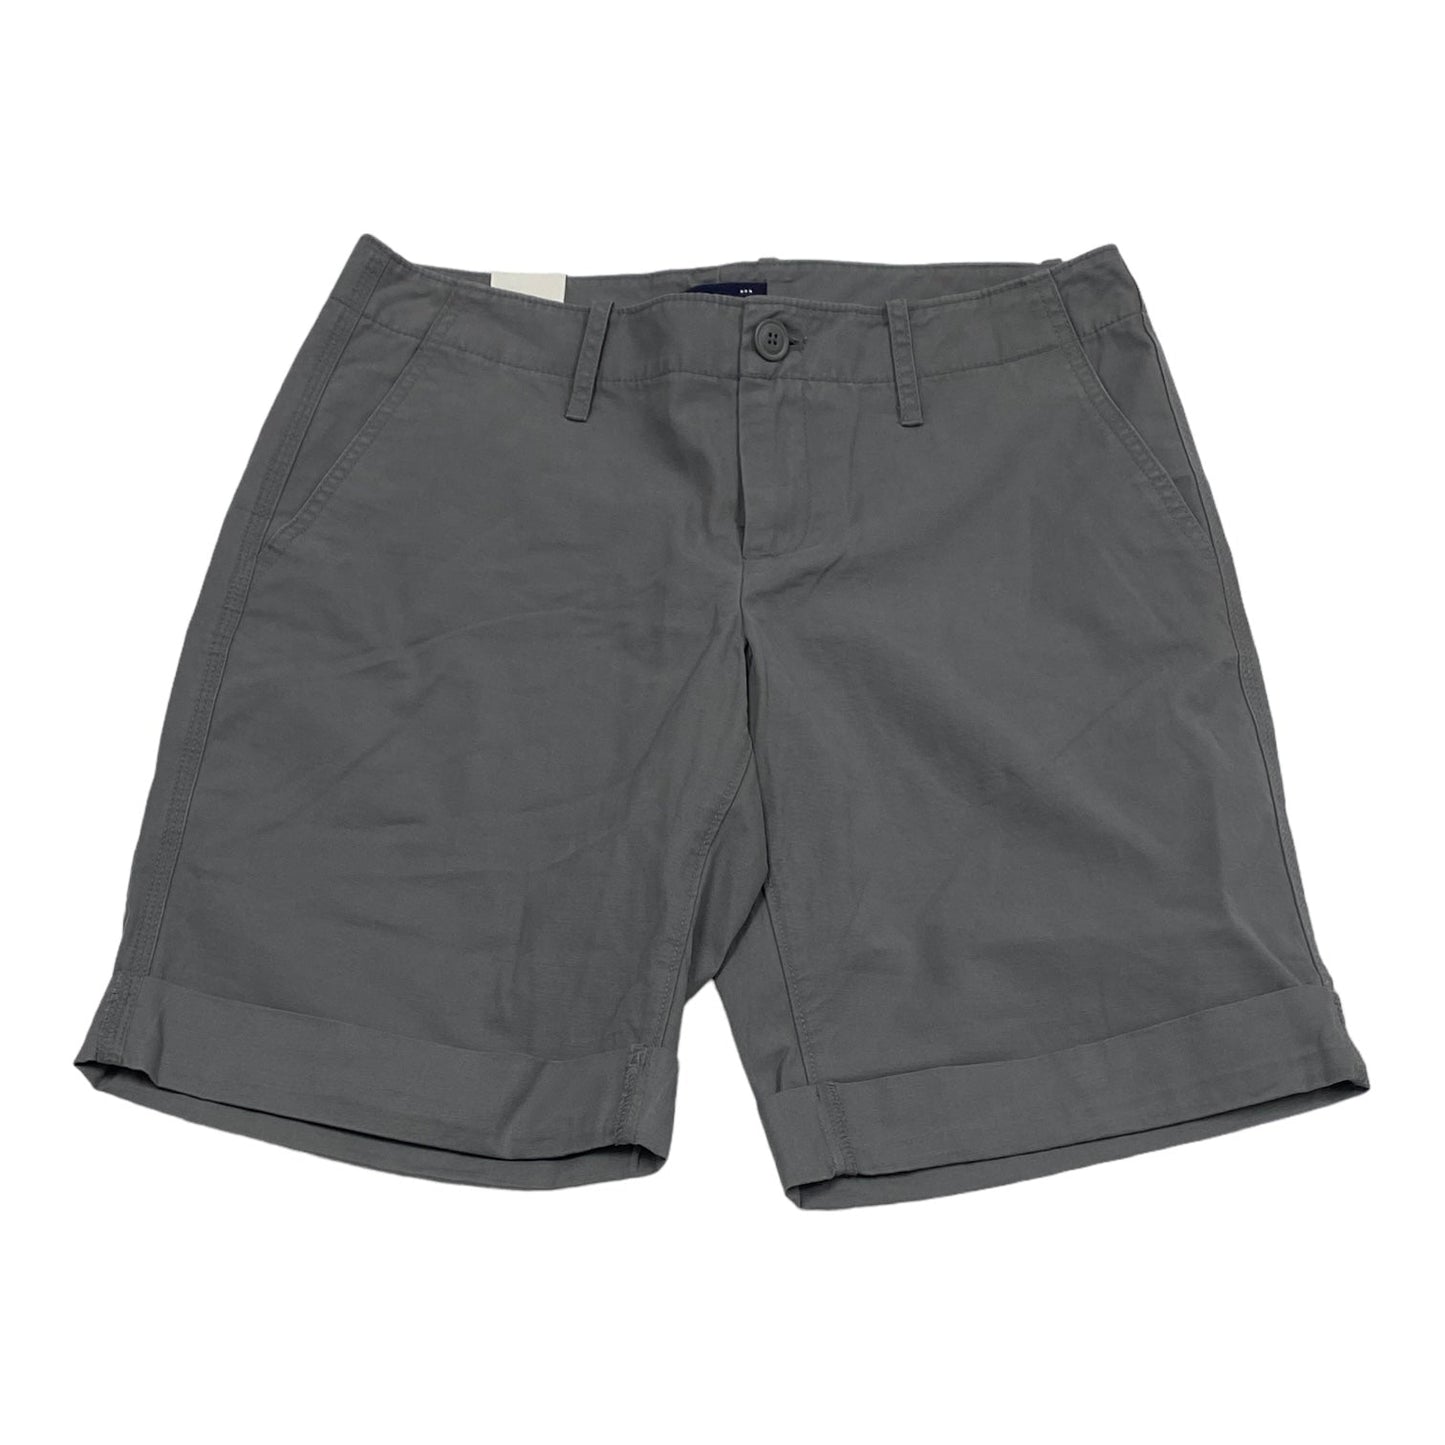 Grey Shorts Gap, Size 8